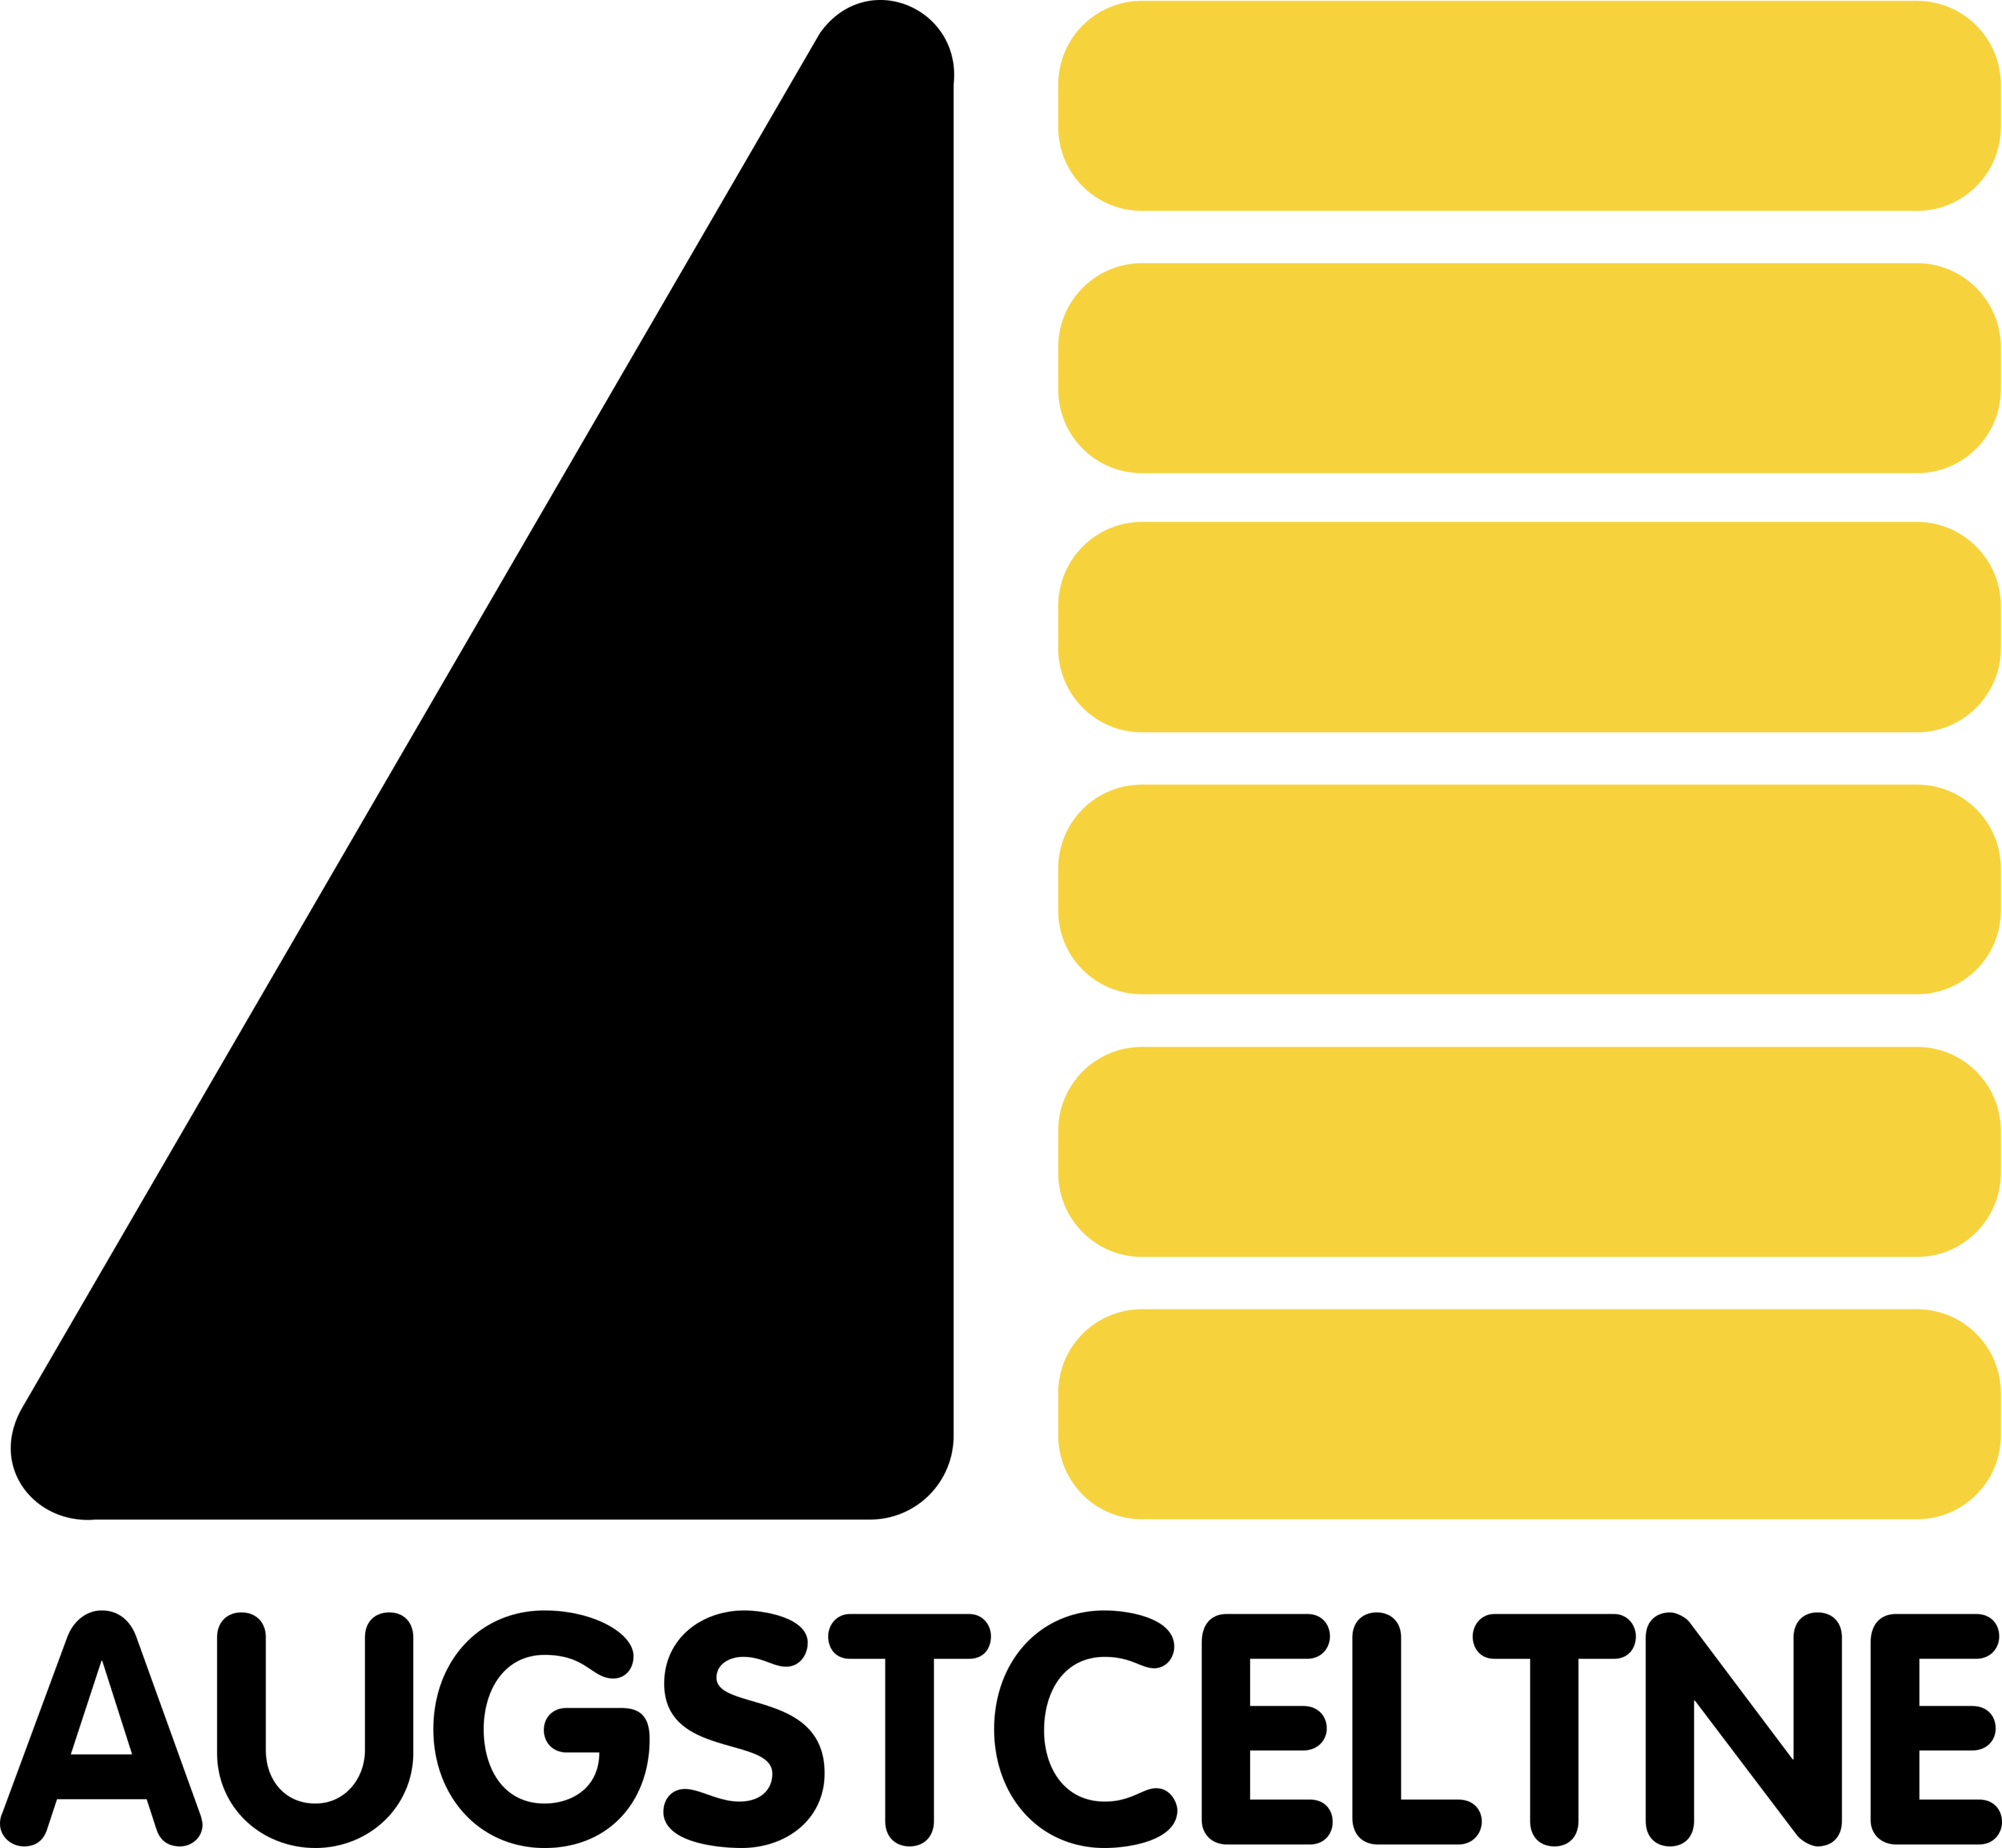 Augstceltne Logo